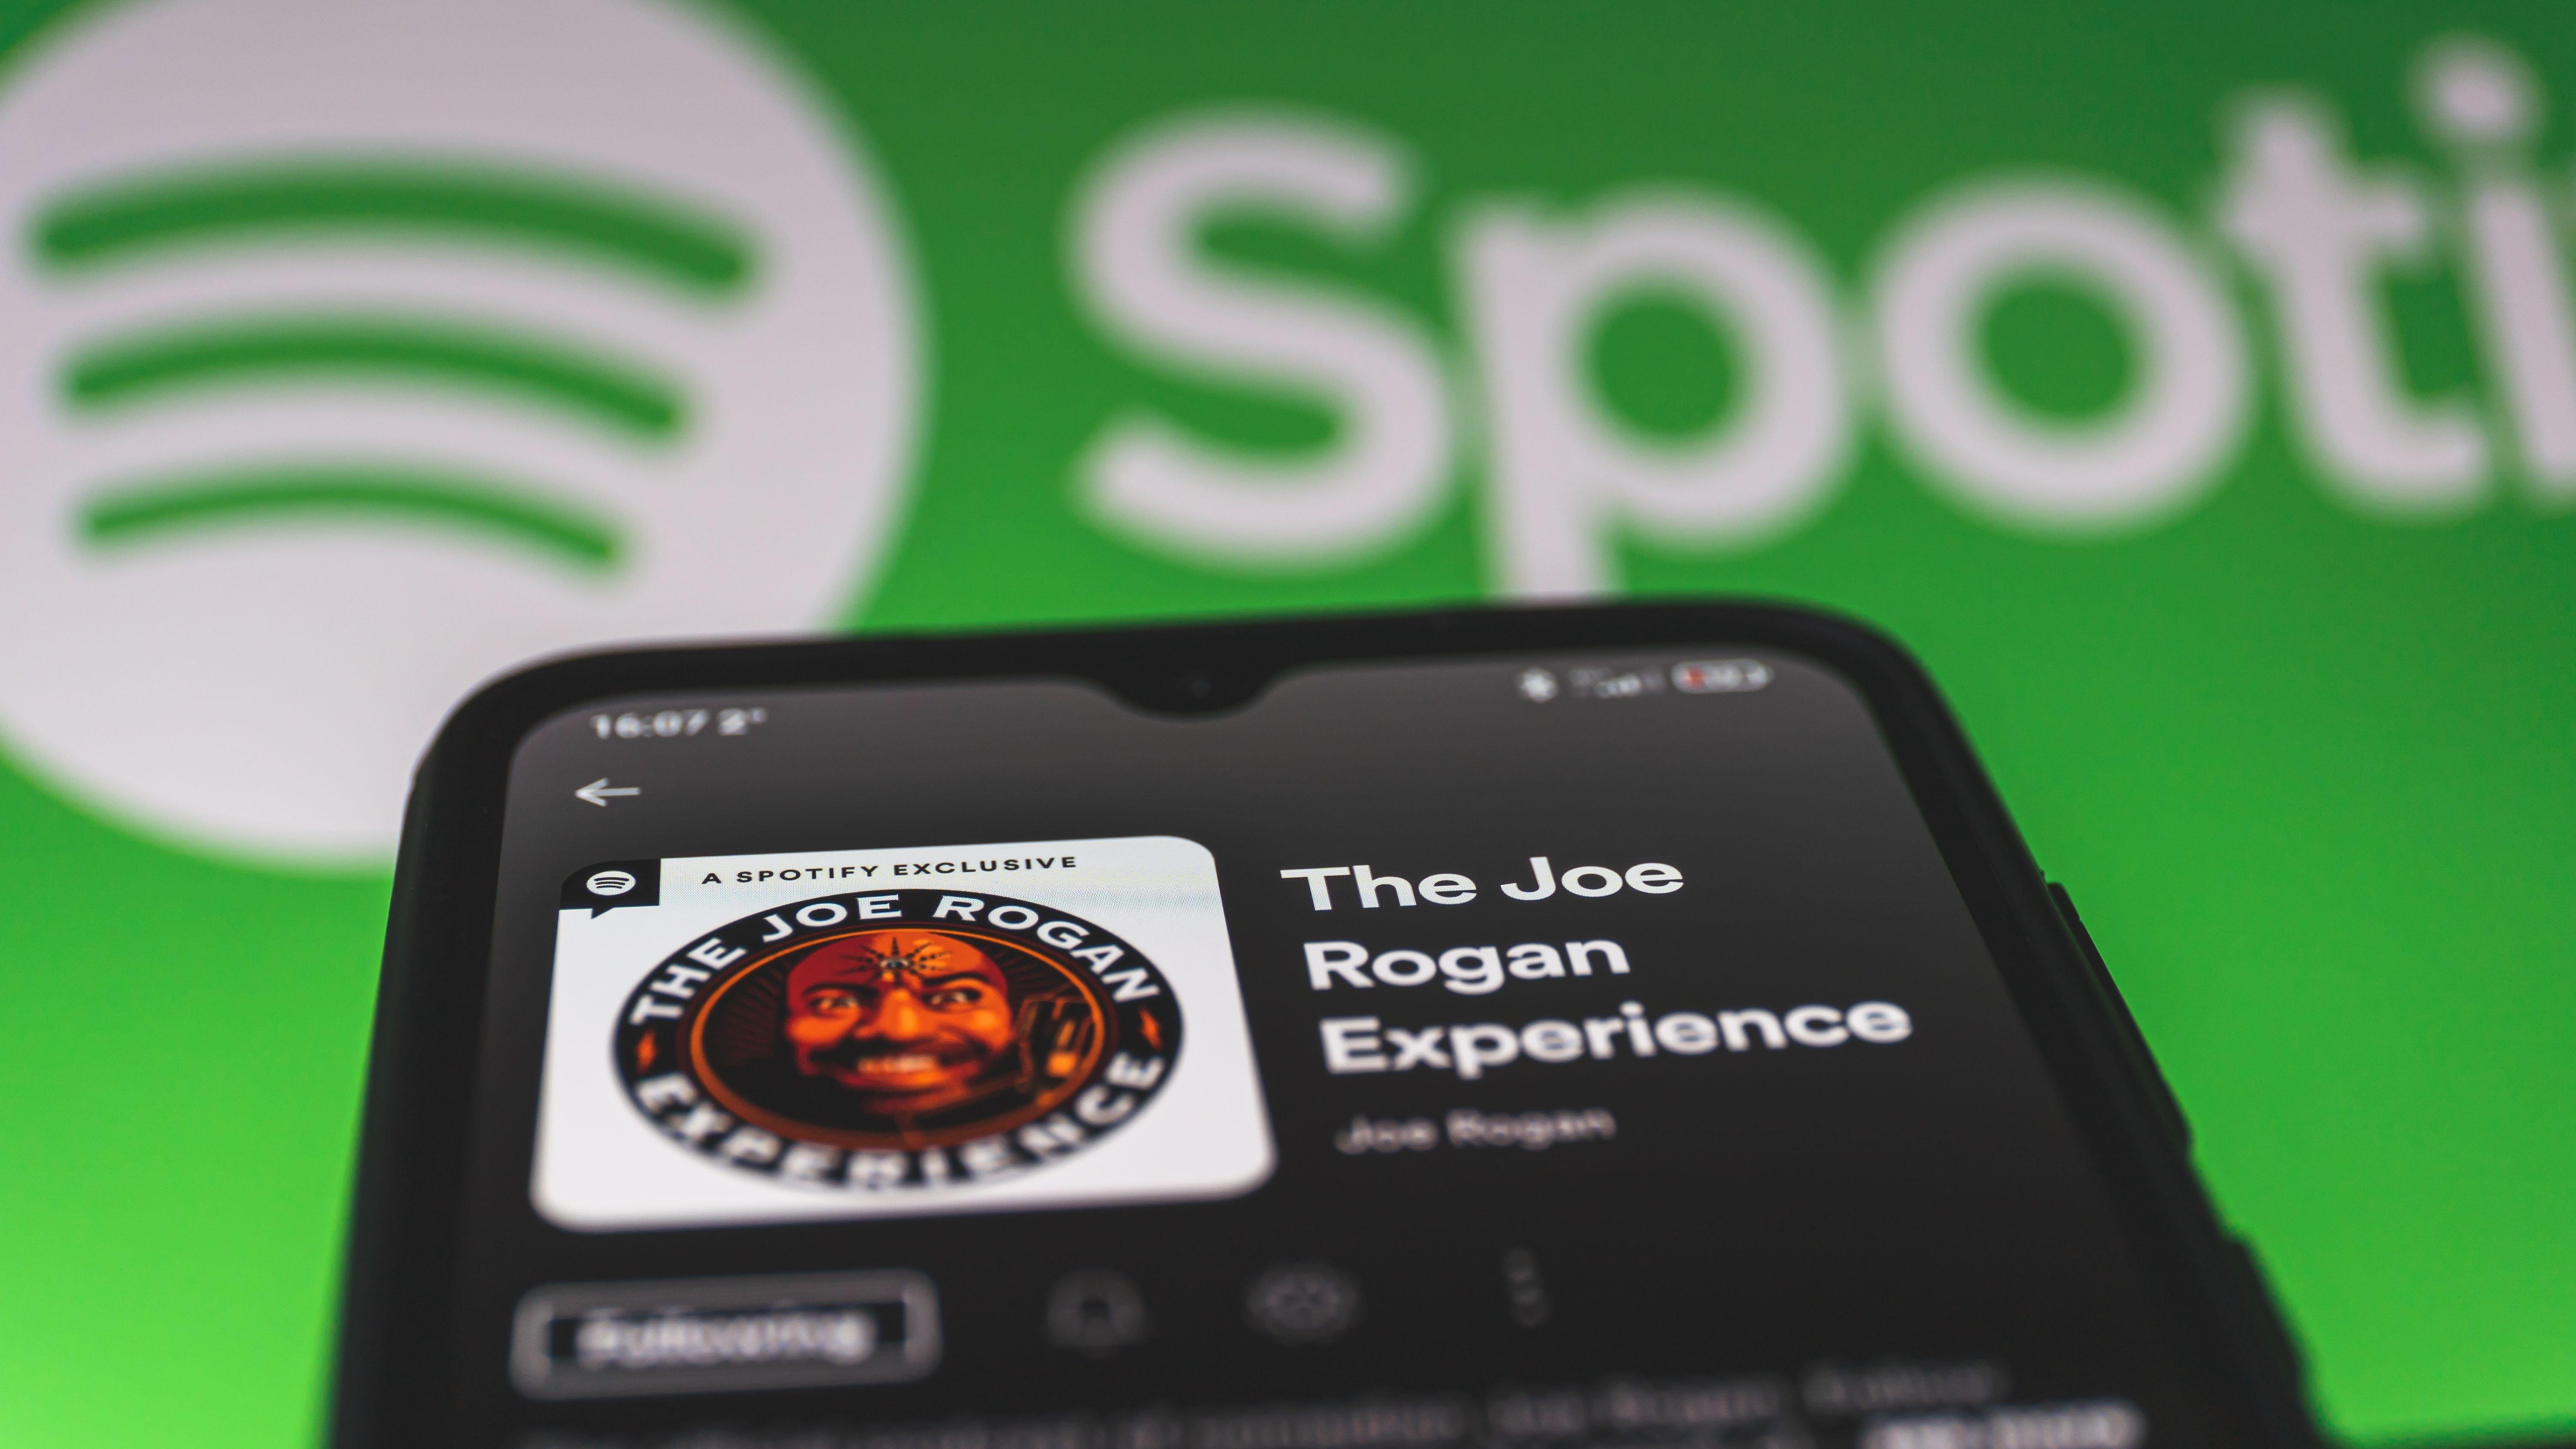 Joe Rogan Experience podcast is seen on a smartphone